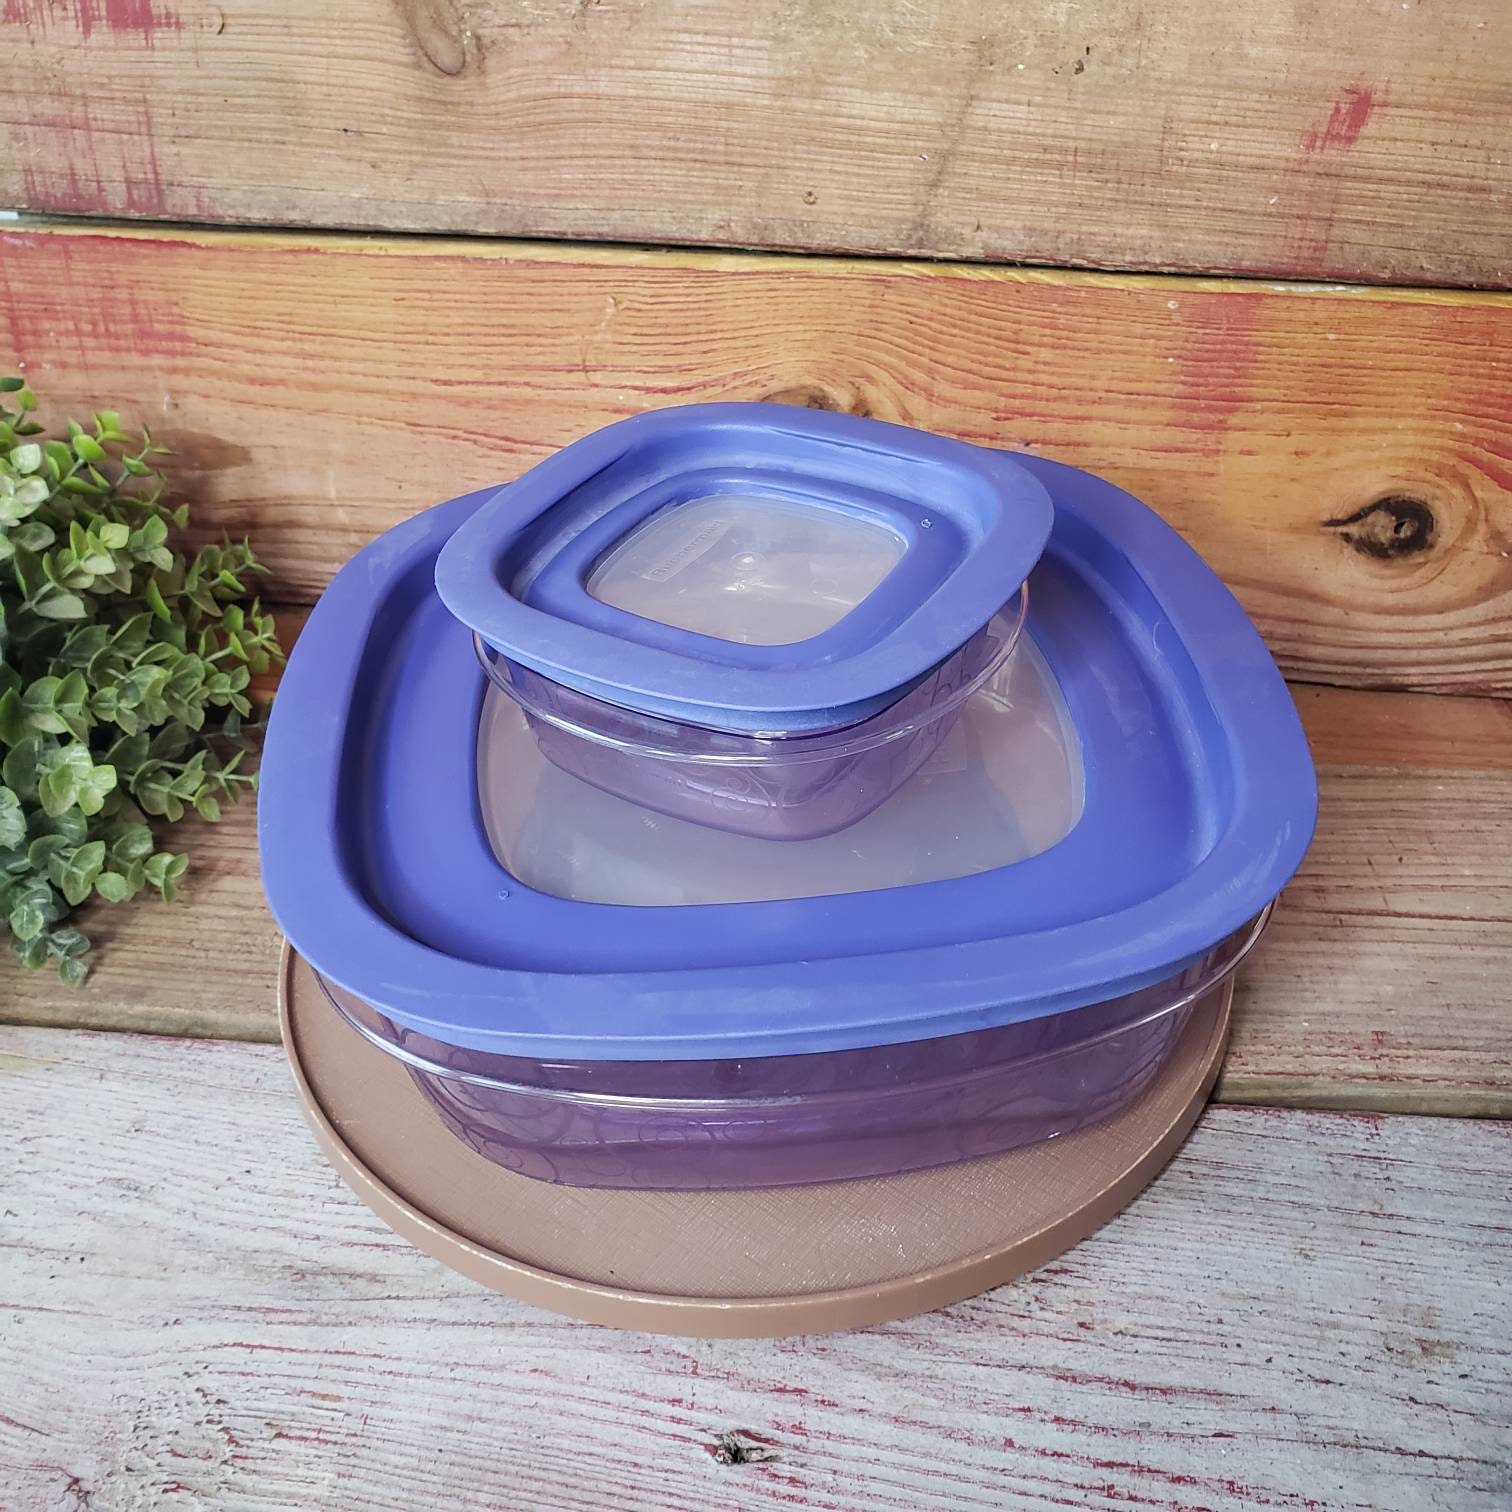 Rubbermaid Premier Easy Find Lids Food Storage Container, Purple